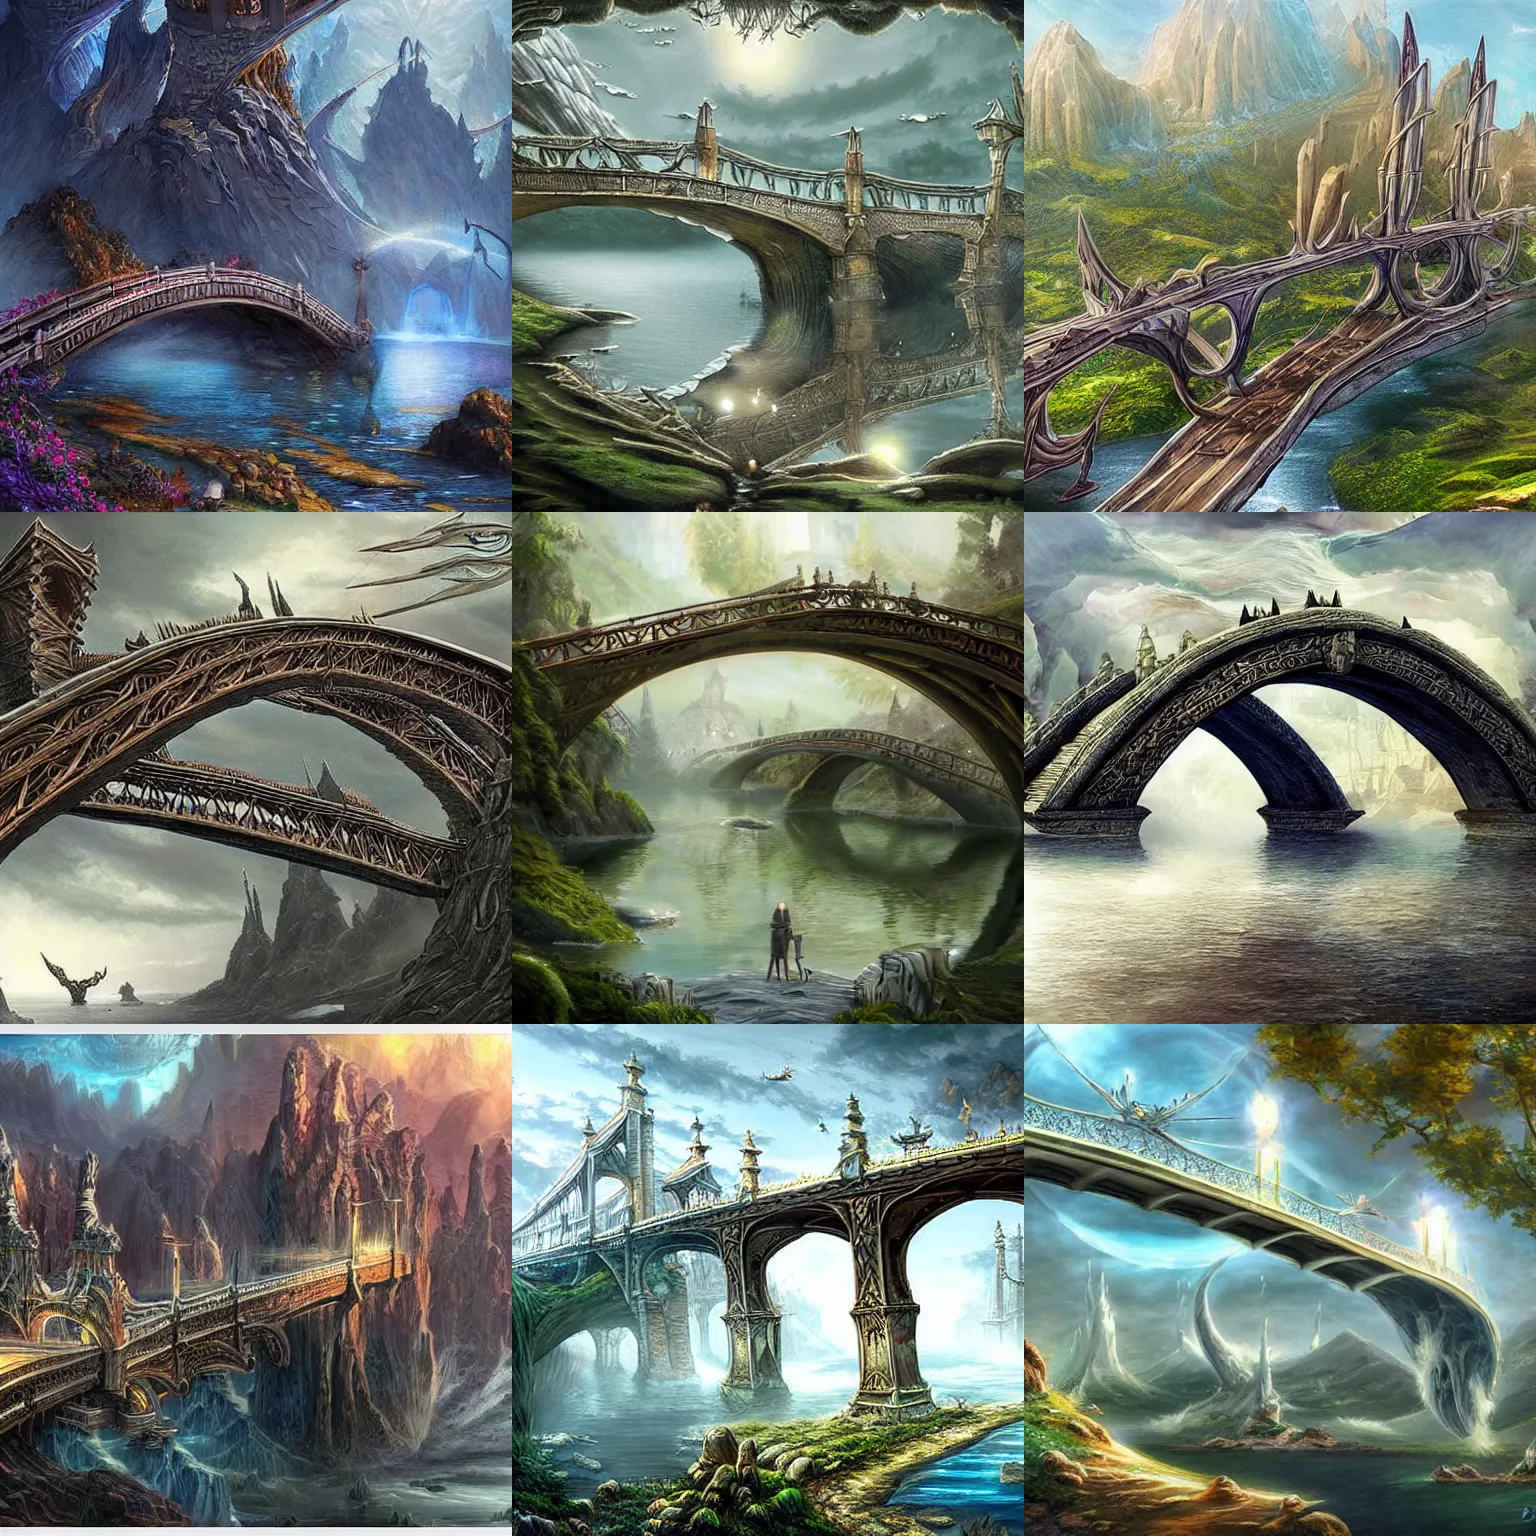 Prompt: epic bridge design, fantasy art, highly detailed